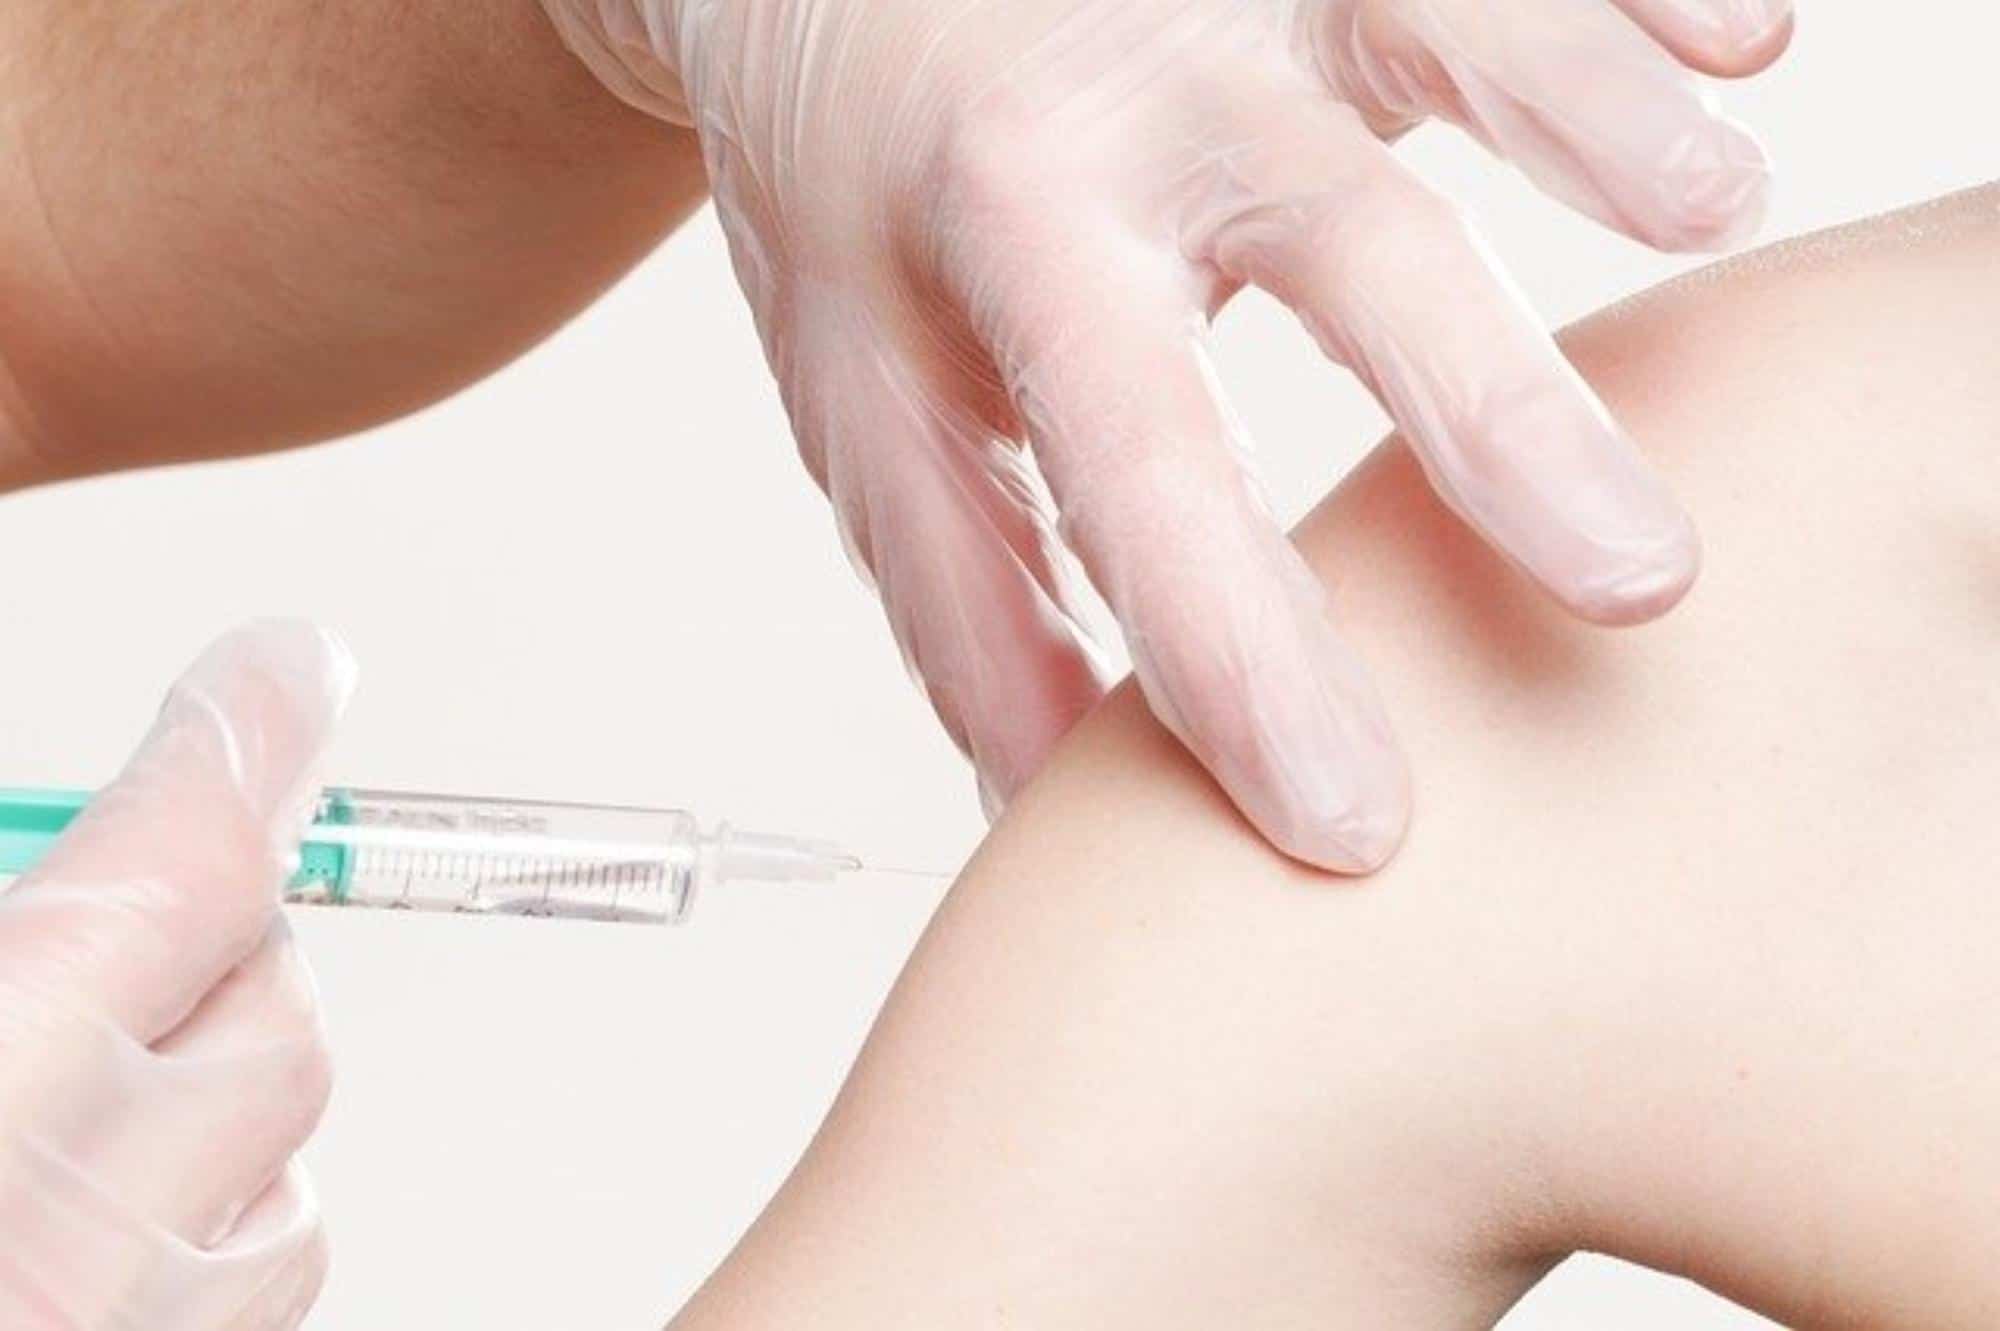 Vaccinations prevent illnesses